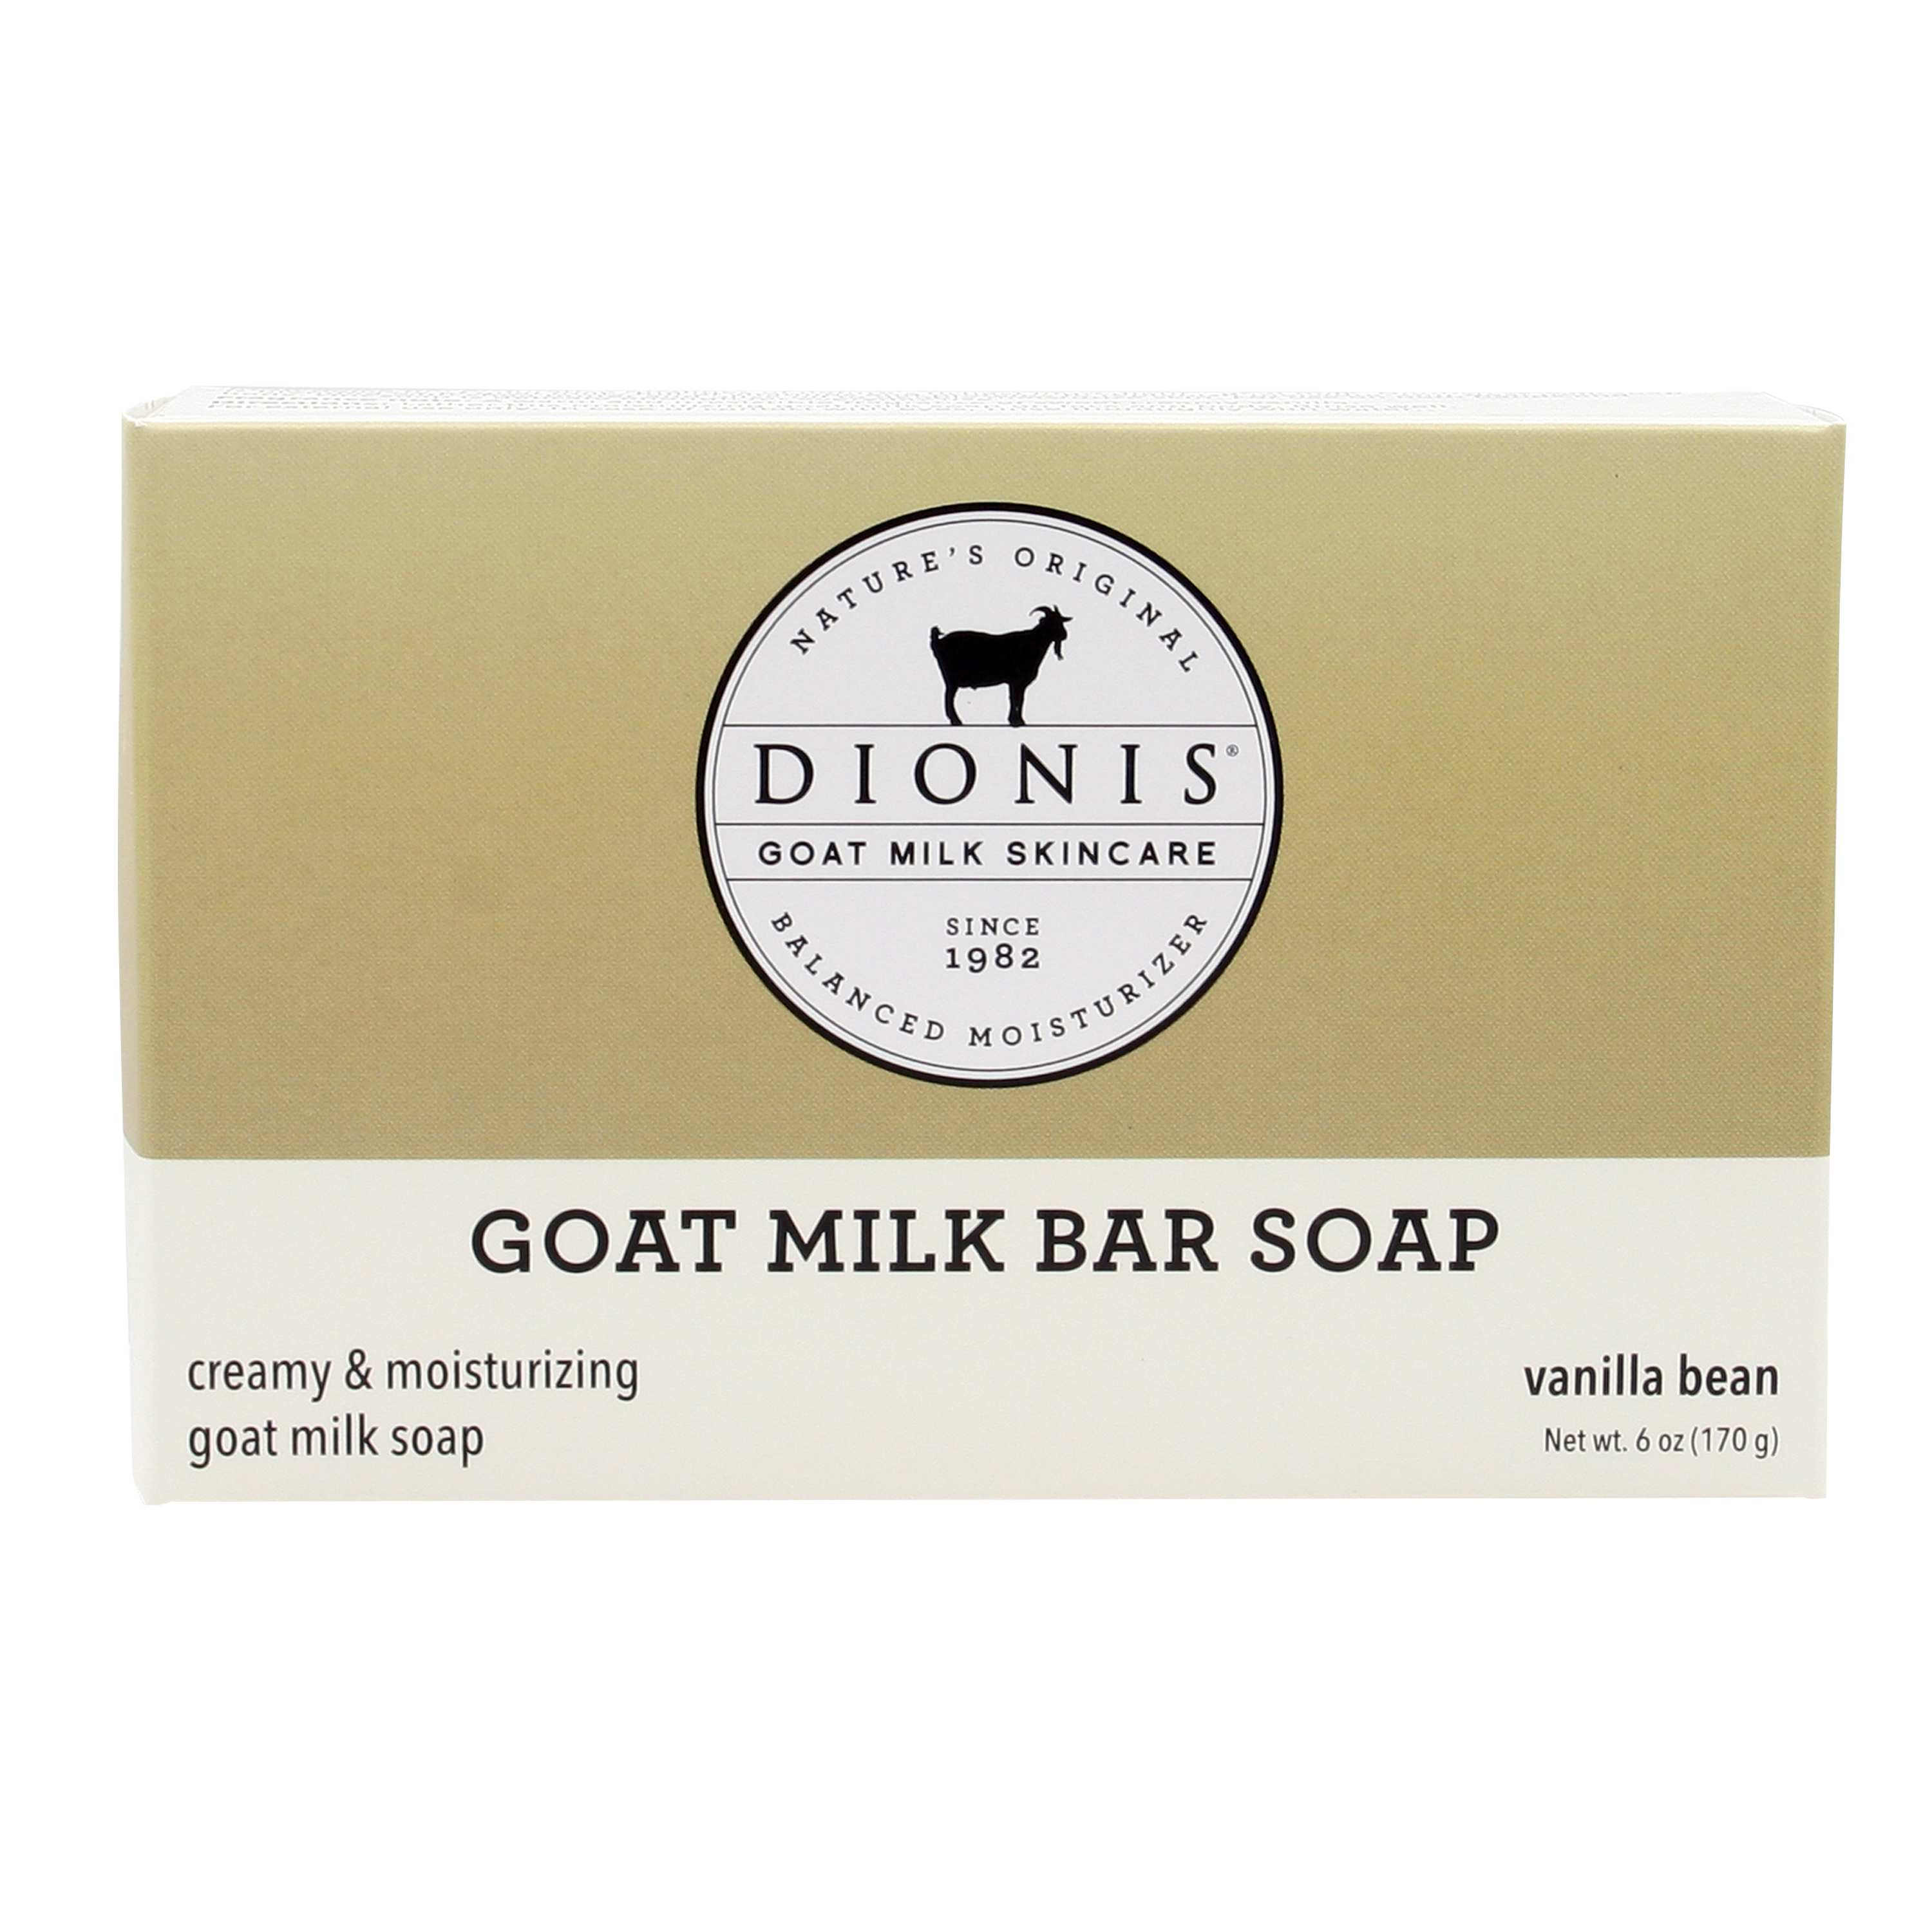 Goat Milk Bar Soap, Vanilla Bean - A 6oz bar soap with a warm and irresistibly sweet, creamy vanilla fragrance. 